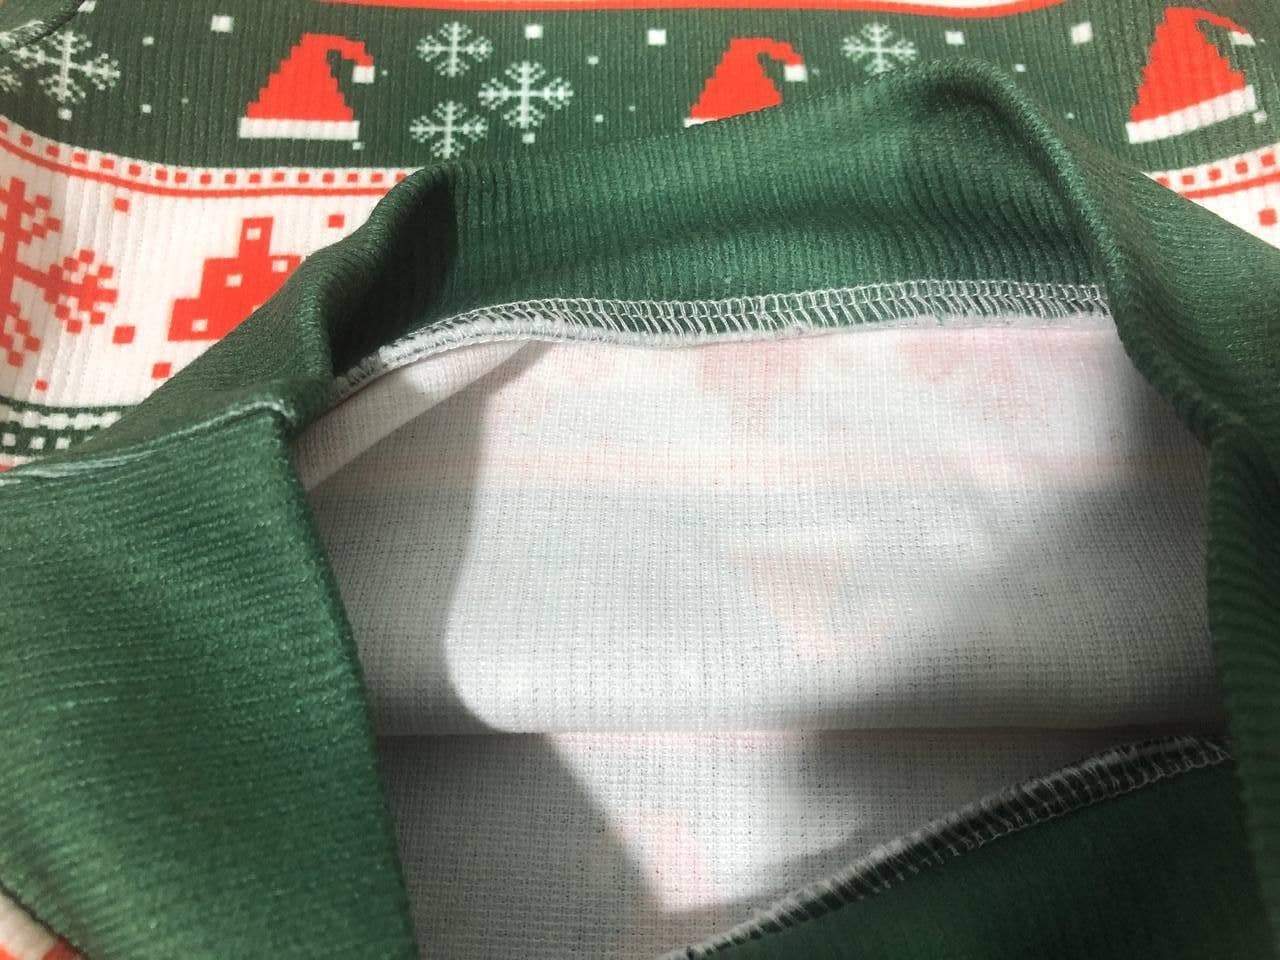 Deadpool Ugly Christmas Sweater Xmas Gift